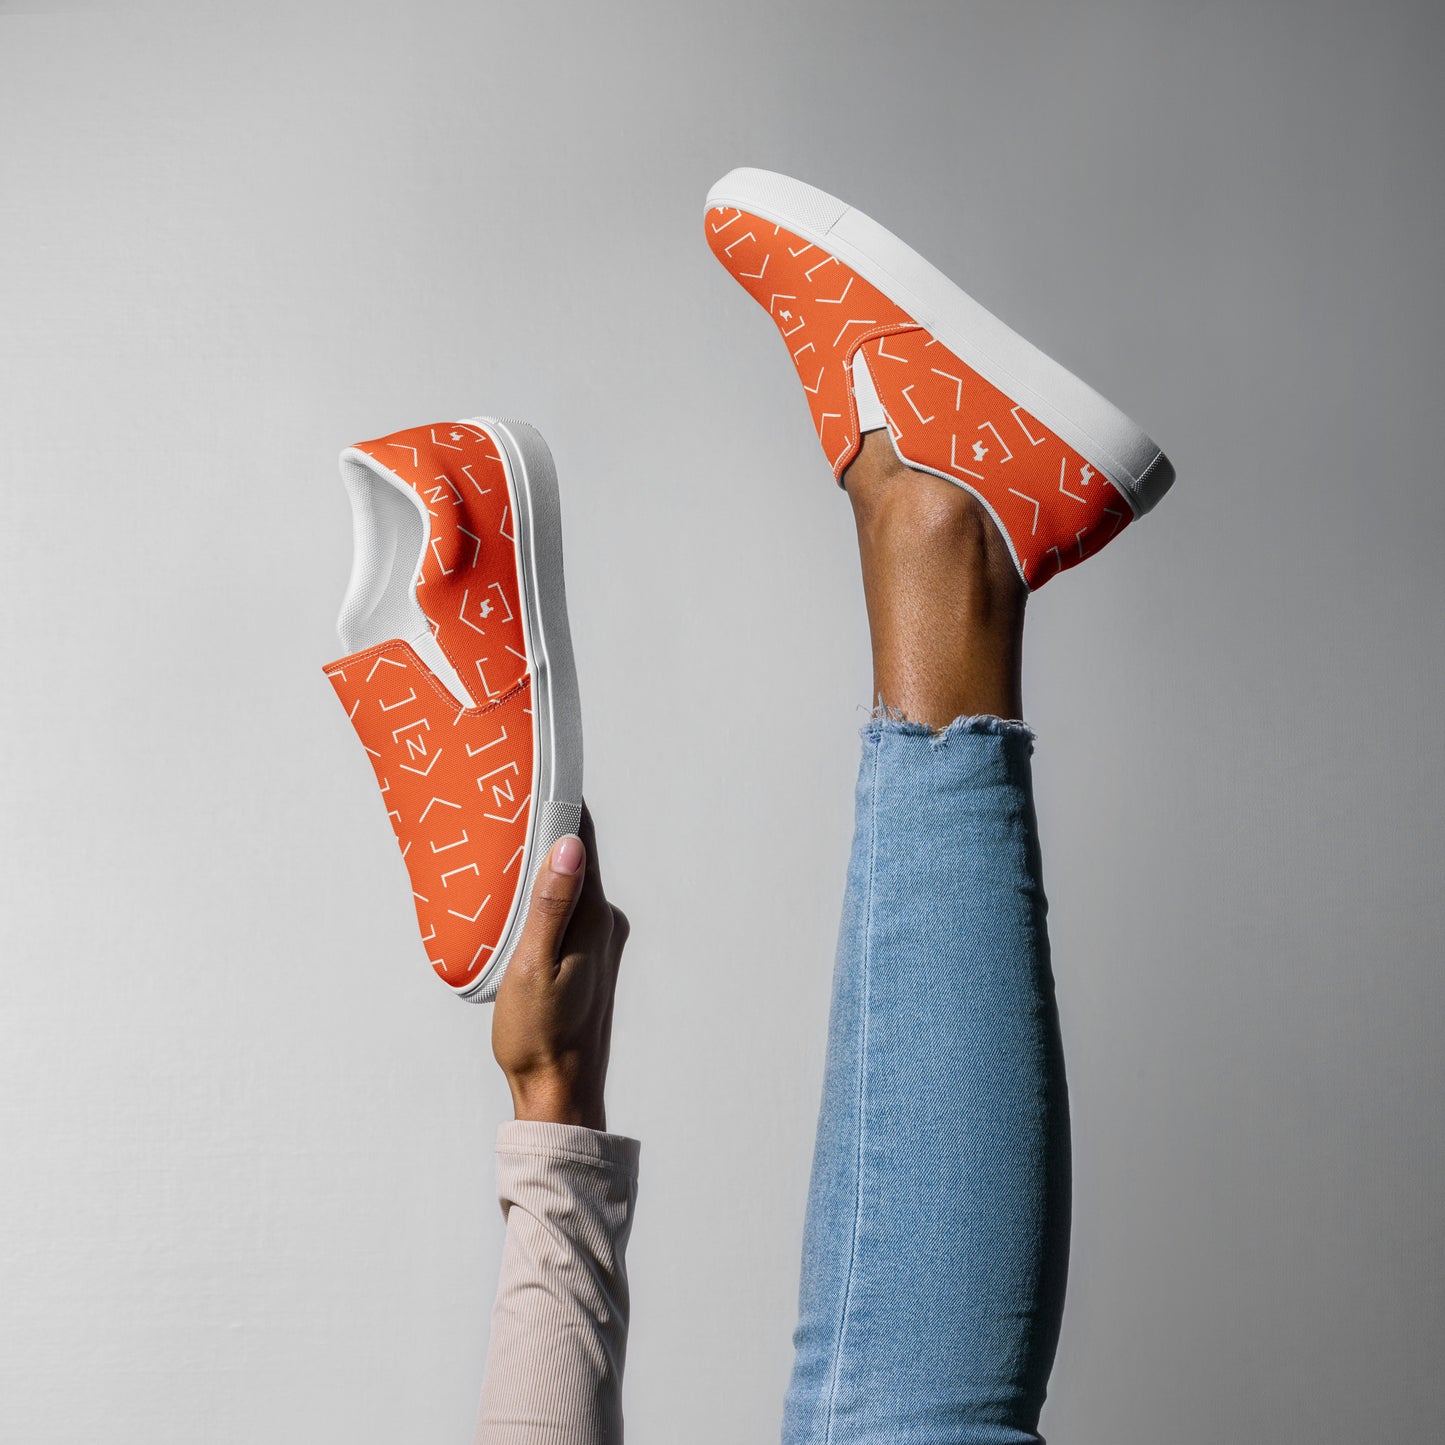 NextHome Orange Print Women’s slip-on canvas shoes